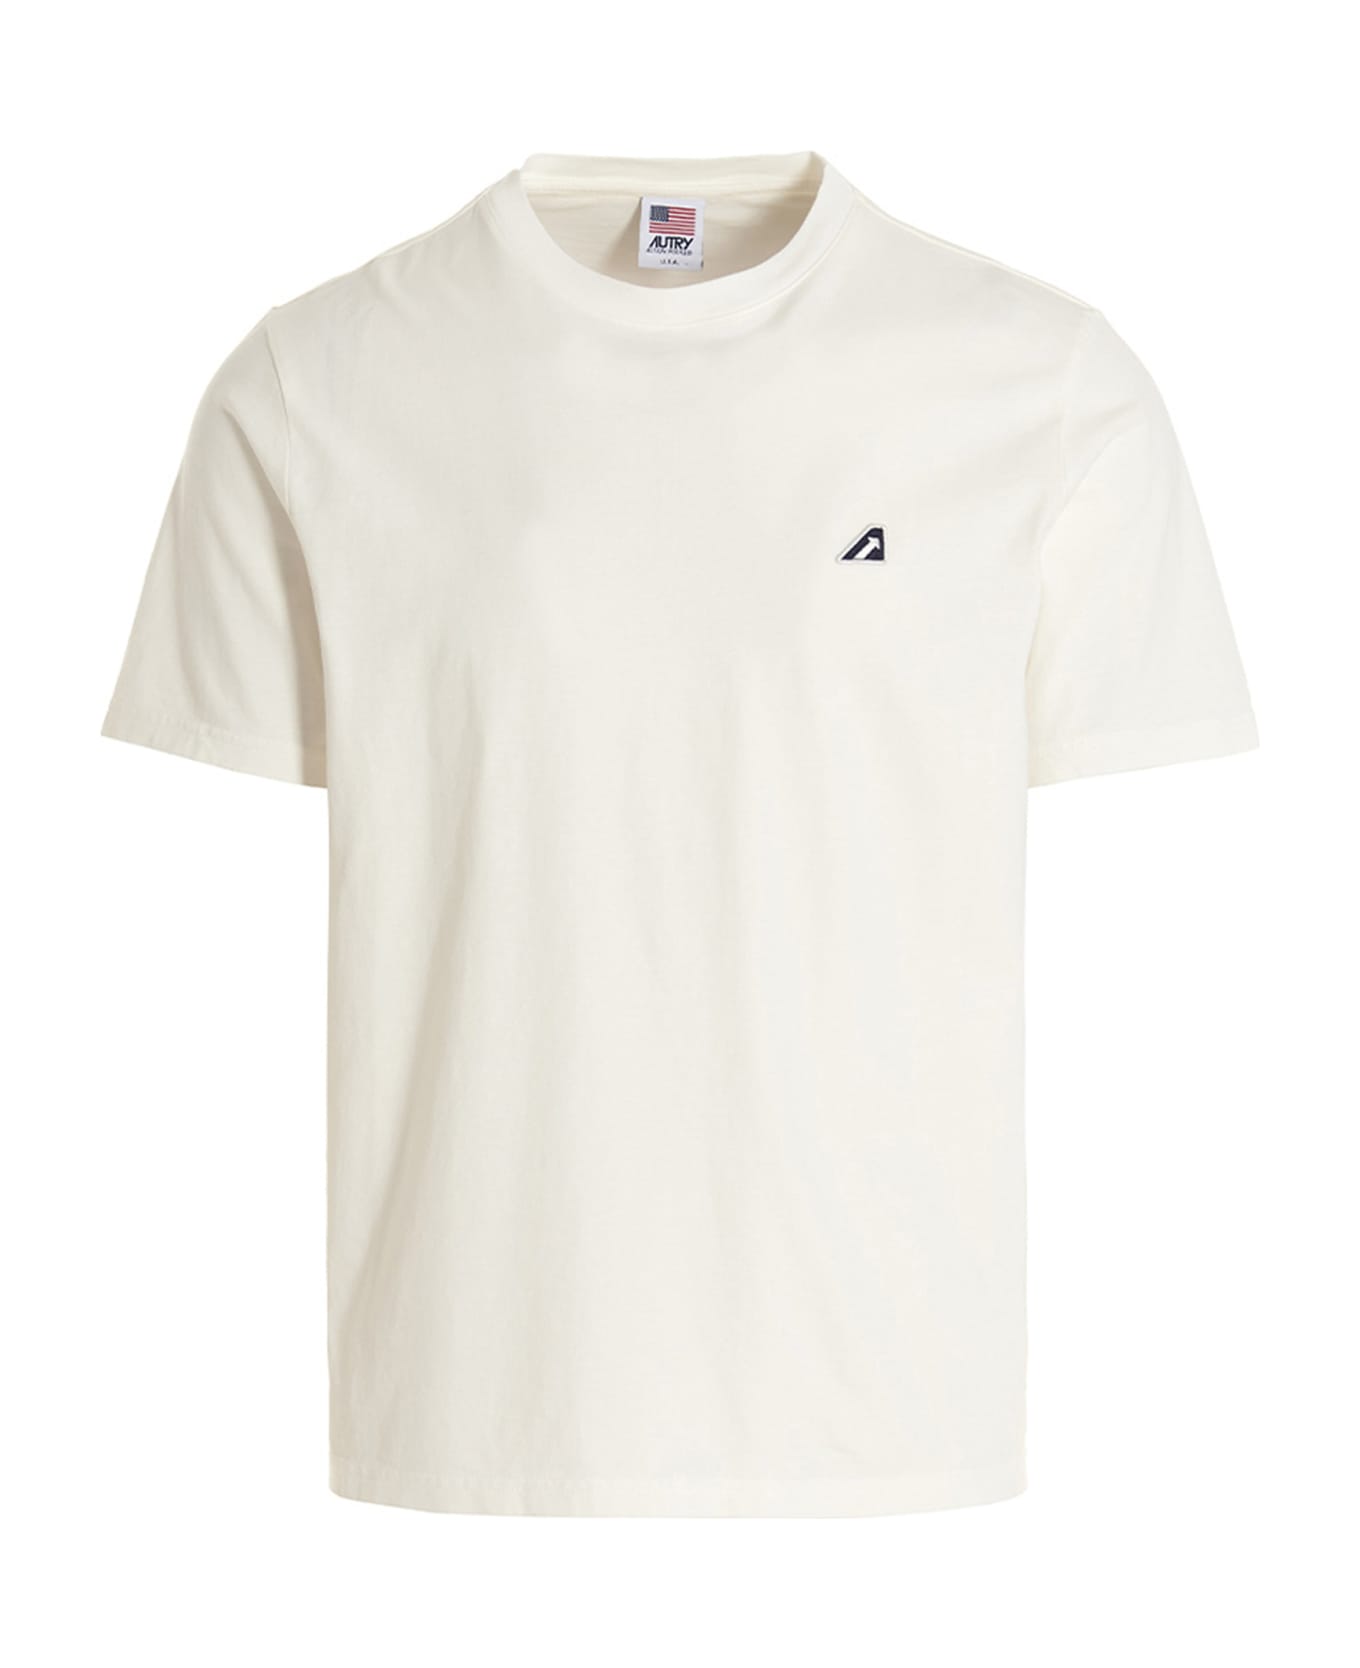 Autry T-shirt In White Cotton - WHITE Tシャツ